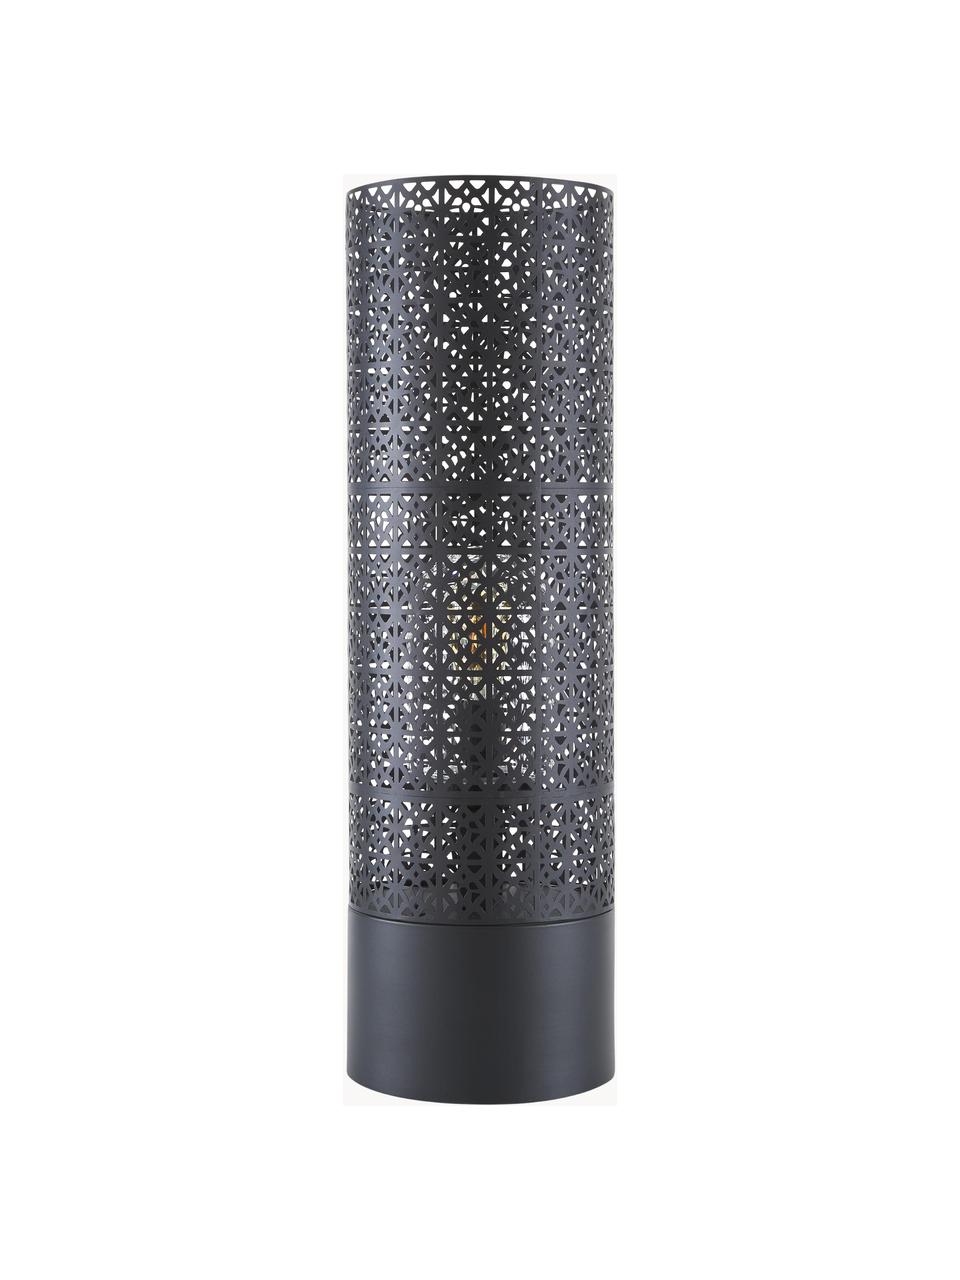 Grote vloerlamp Maison met stekker, Lamp: gepoedercoat metaal, Diffuser: glas, Zwart, Ø 24 x H 78 cm